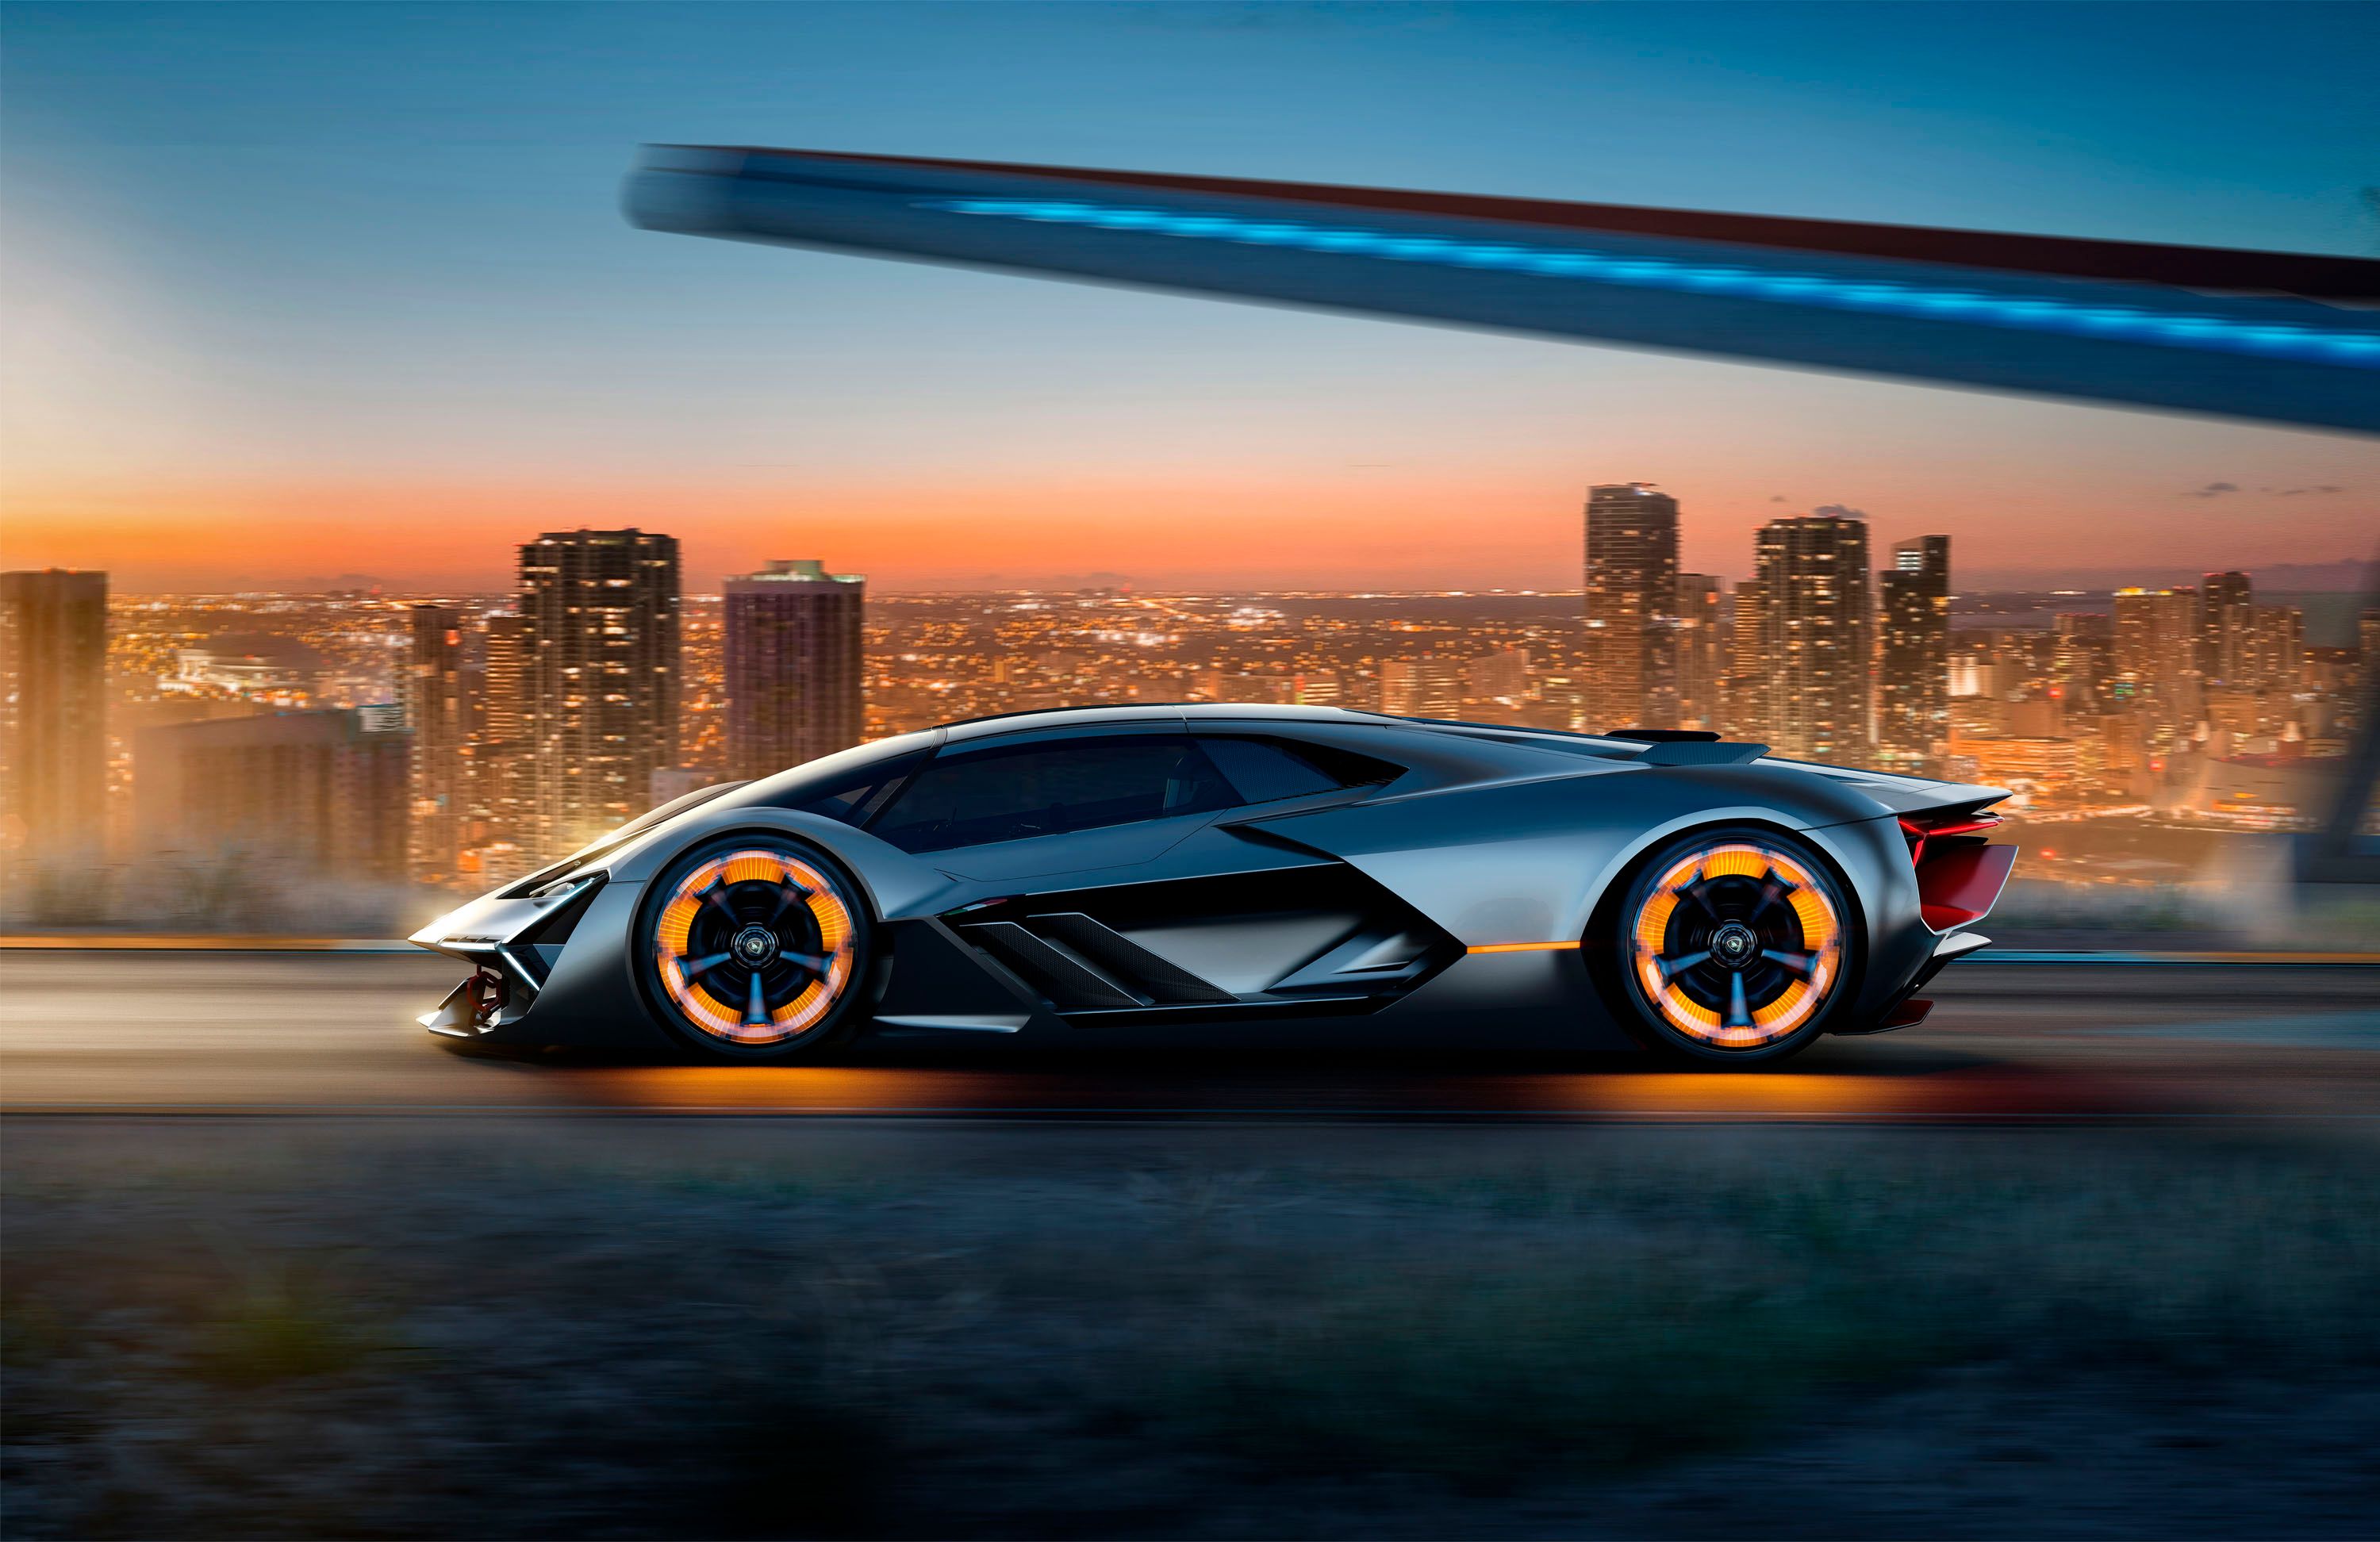 The true embodiment of future Lamborghini vehicles